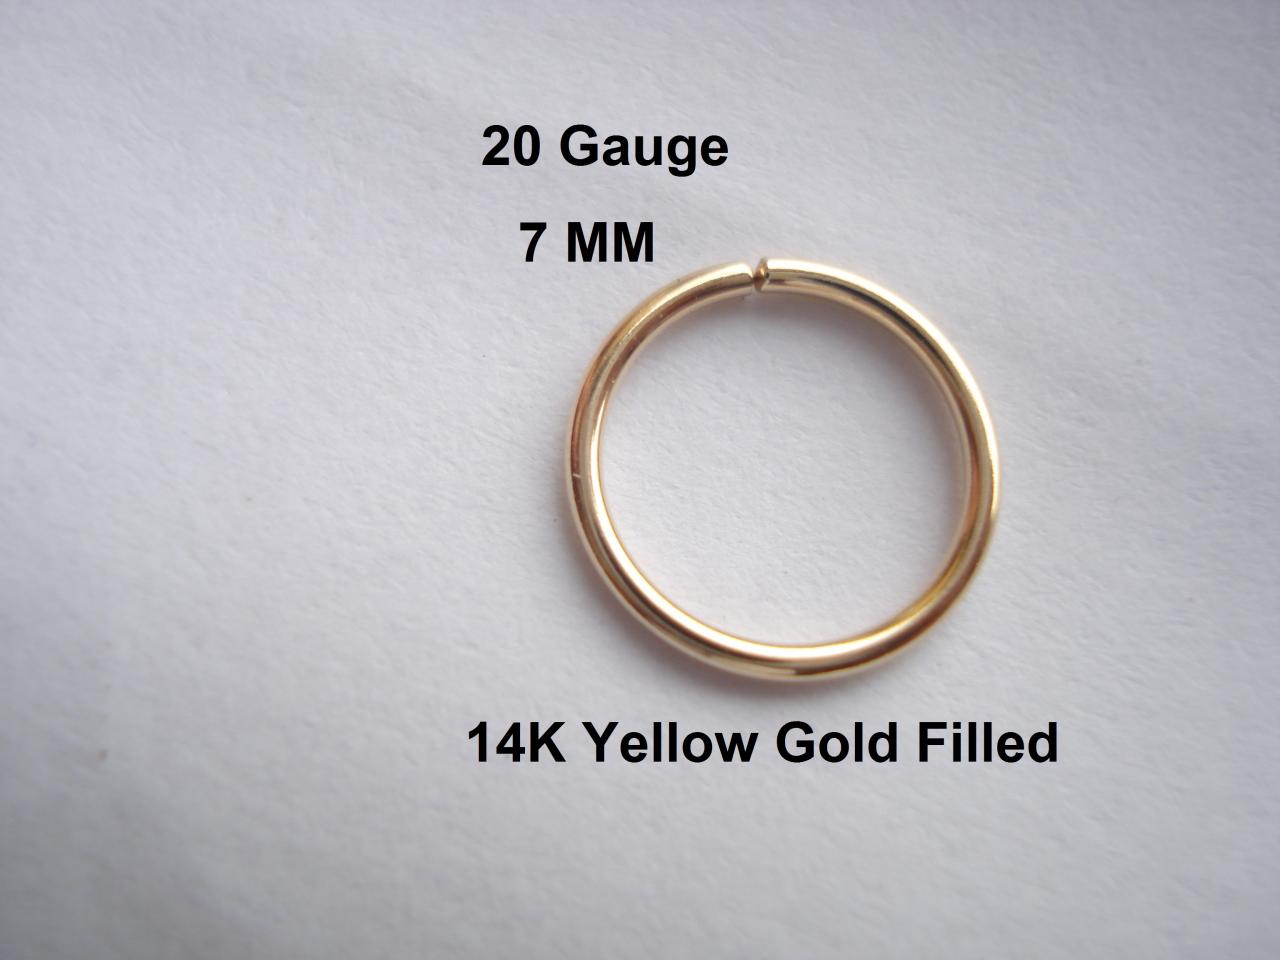 20g Gauge 14k Yellow Gold Filled, Septum/nose Ring/hoop Helix/earring/tragus,7 Mm Inner Diameter